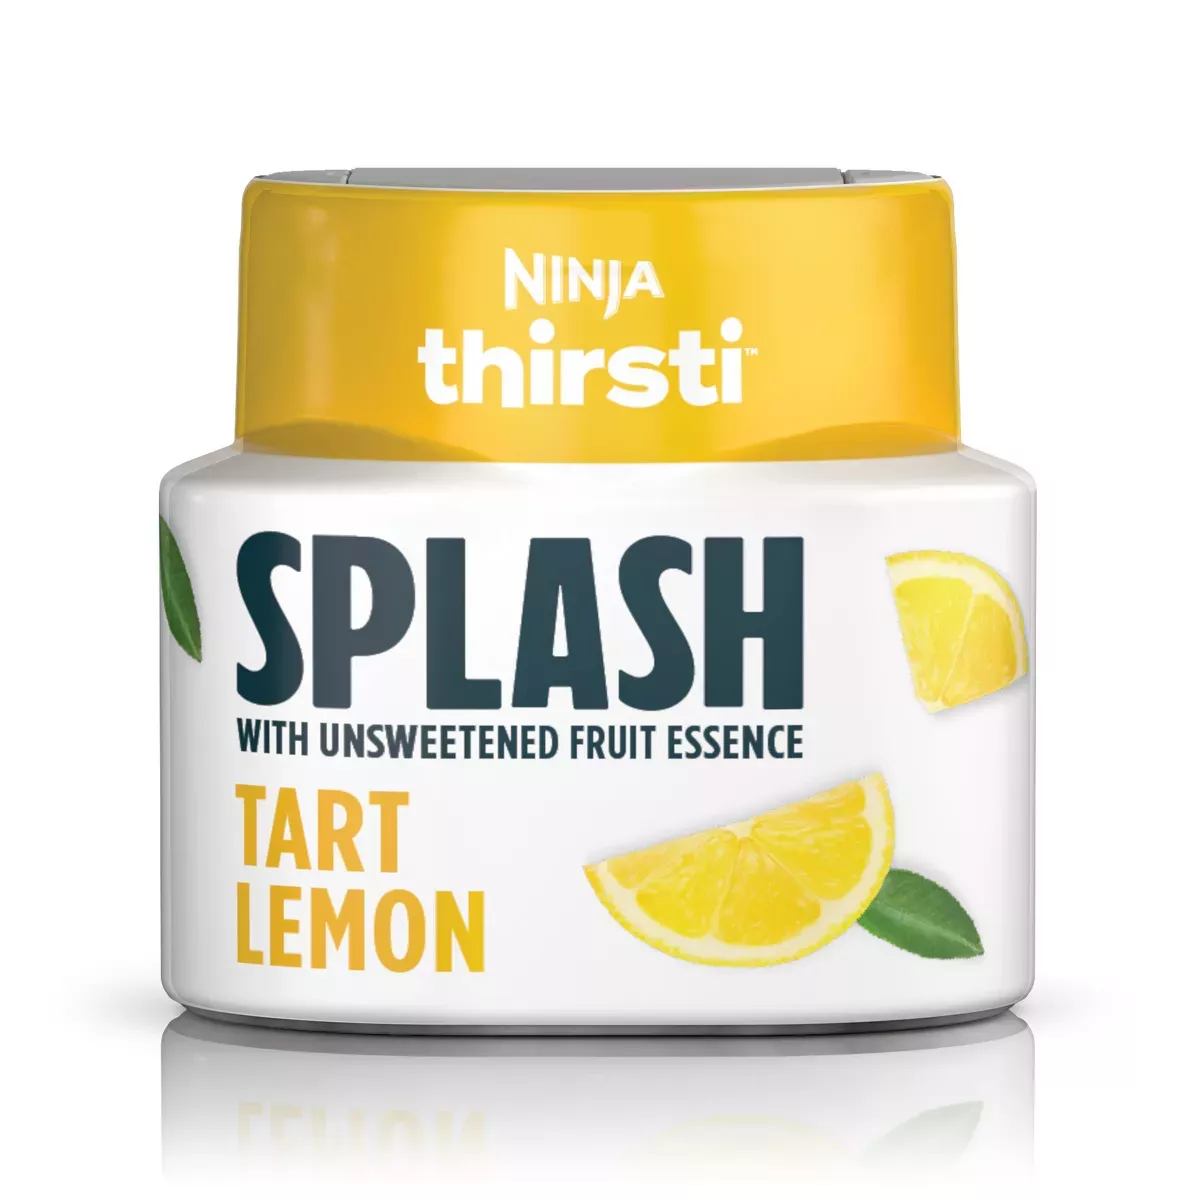 Ninja Thirsti™ Drink System curated on LTK